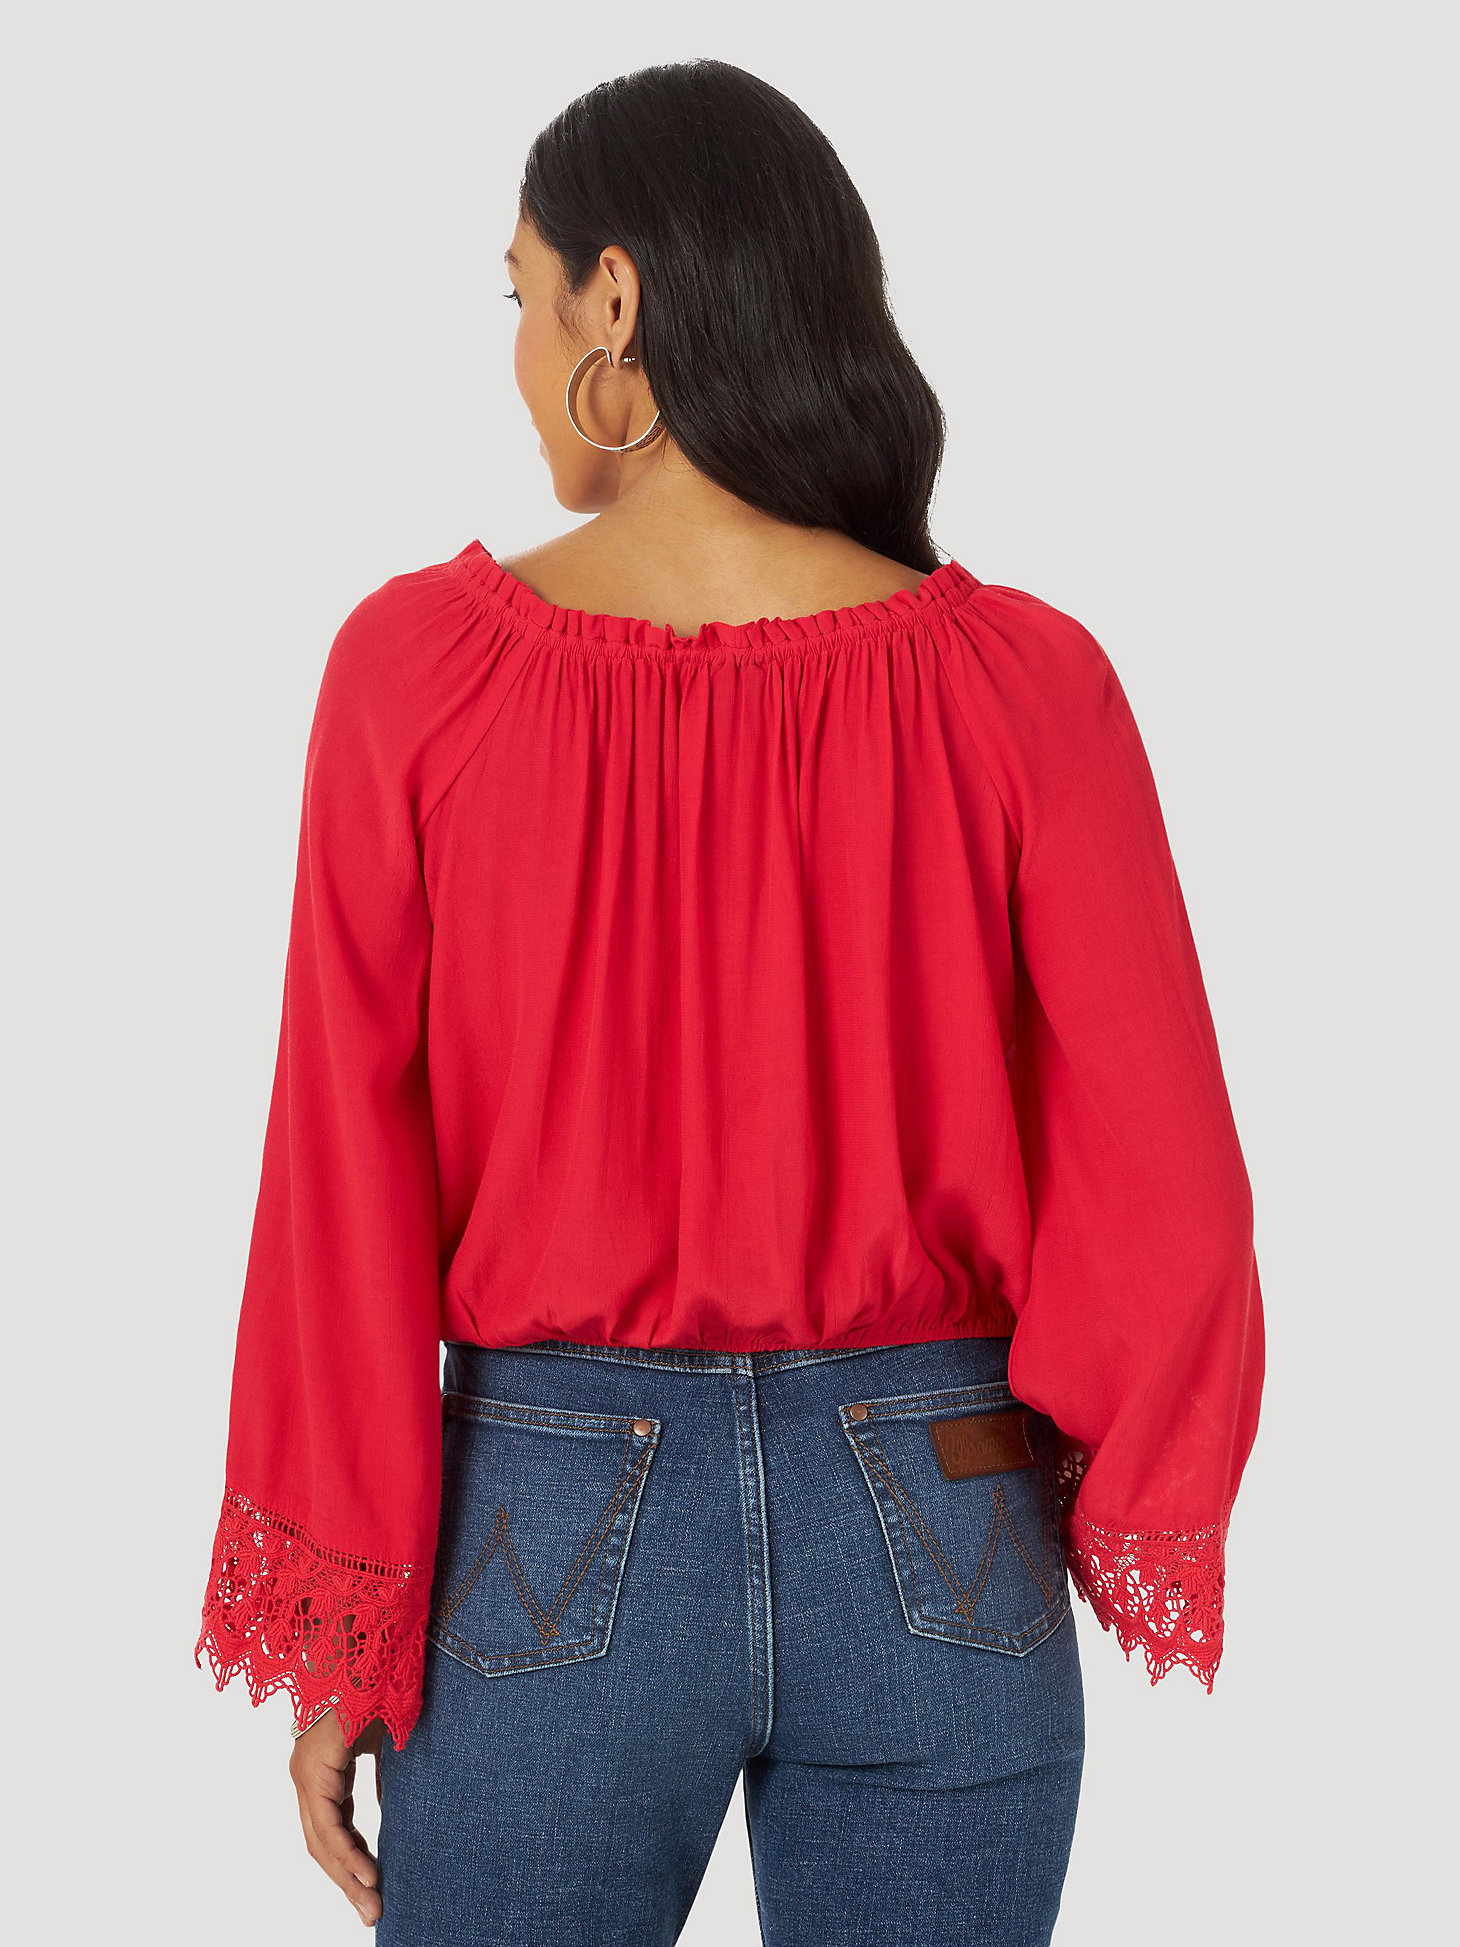 Women's Wrangler Retro® Long Sleeve Crochet Lace Blouse in red alternative view 1